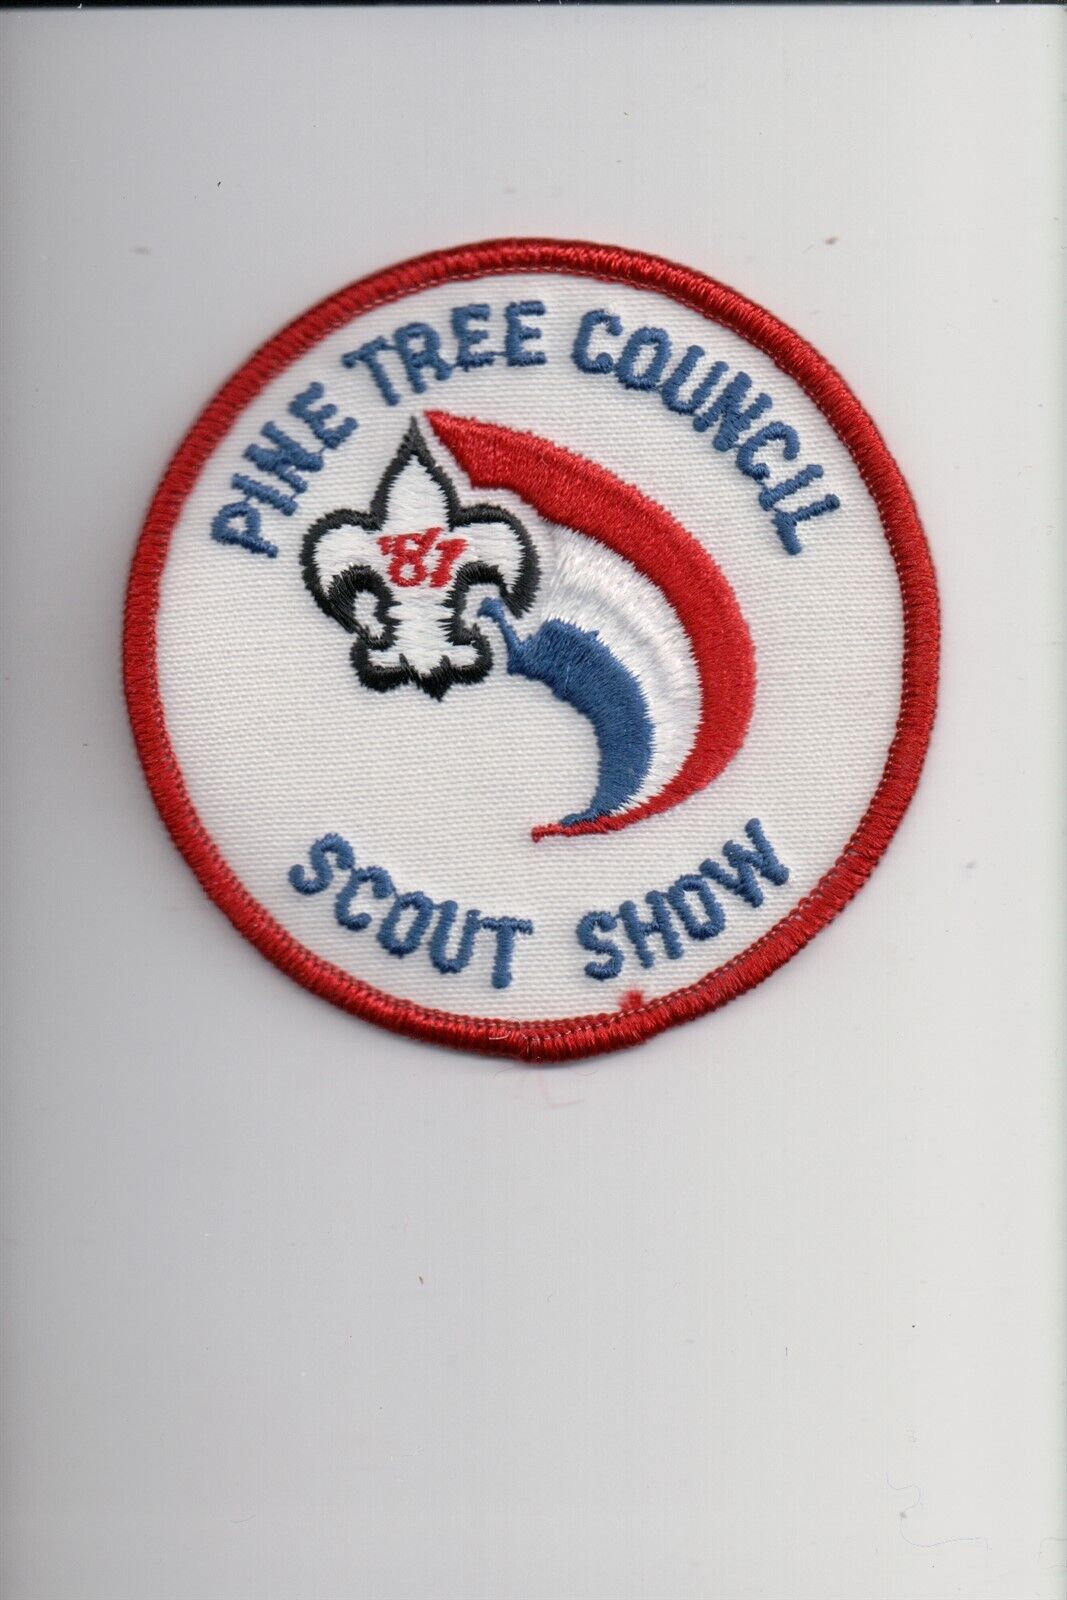 1987 Pine Tree Council Scout Show patch